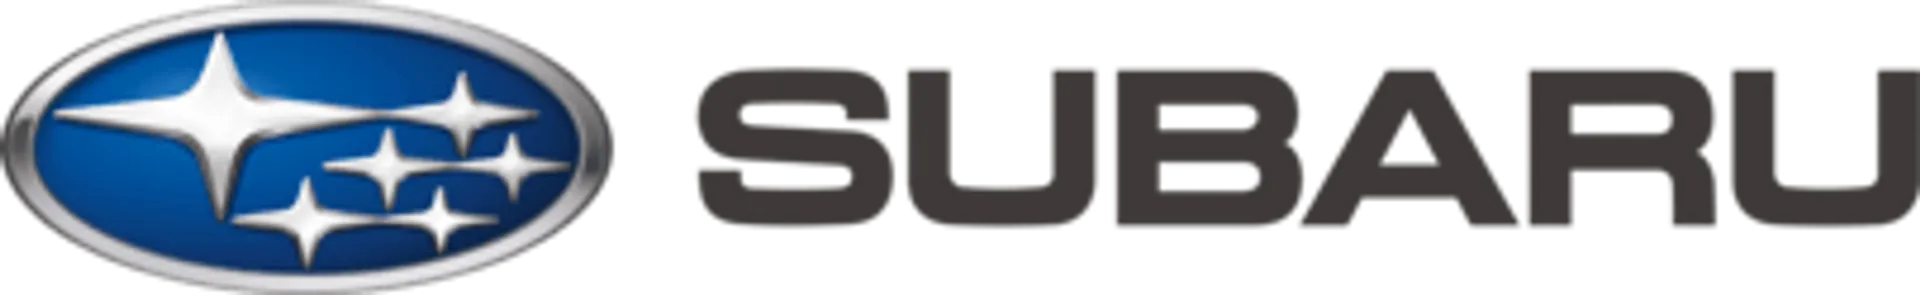 **SUBARU** logo